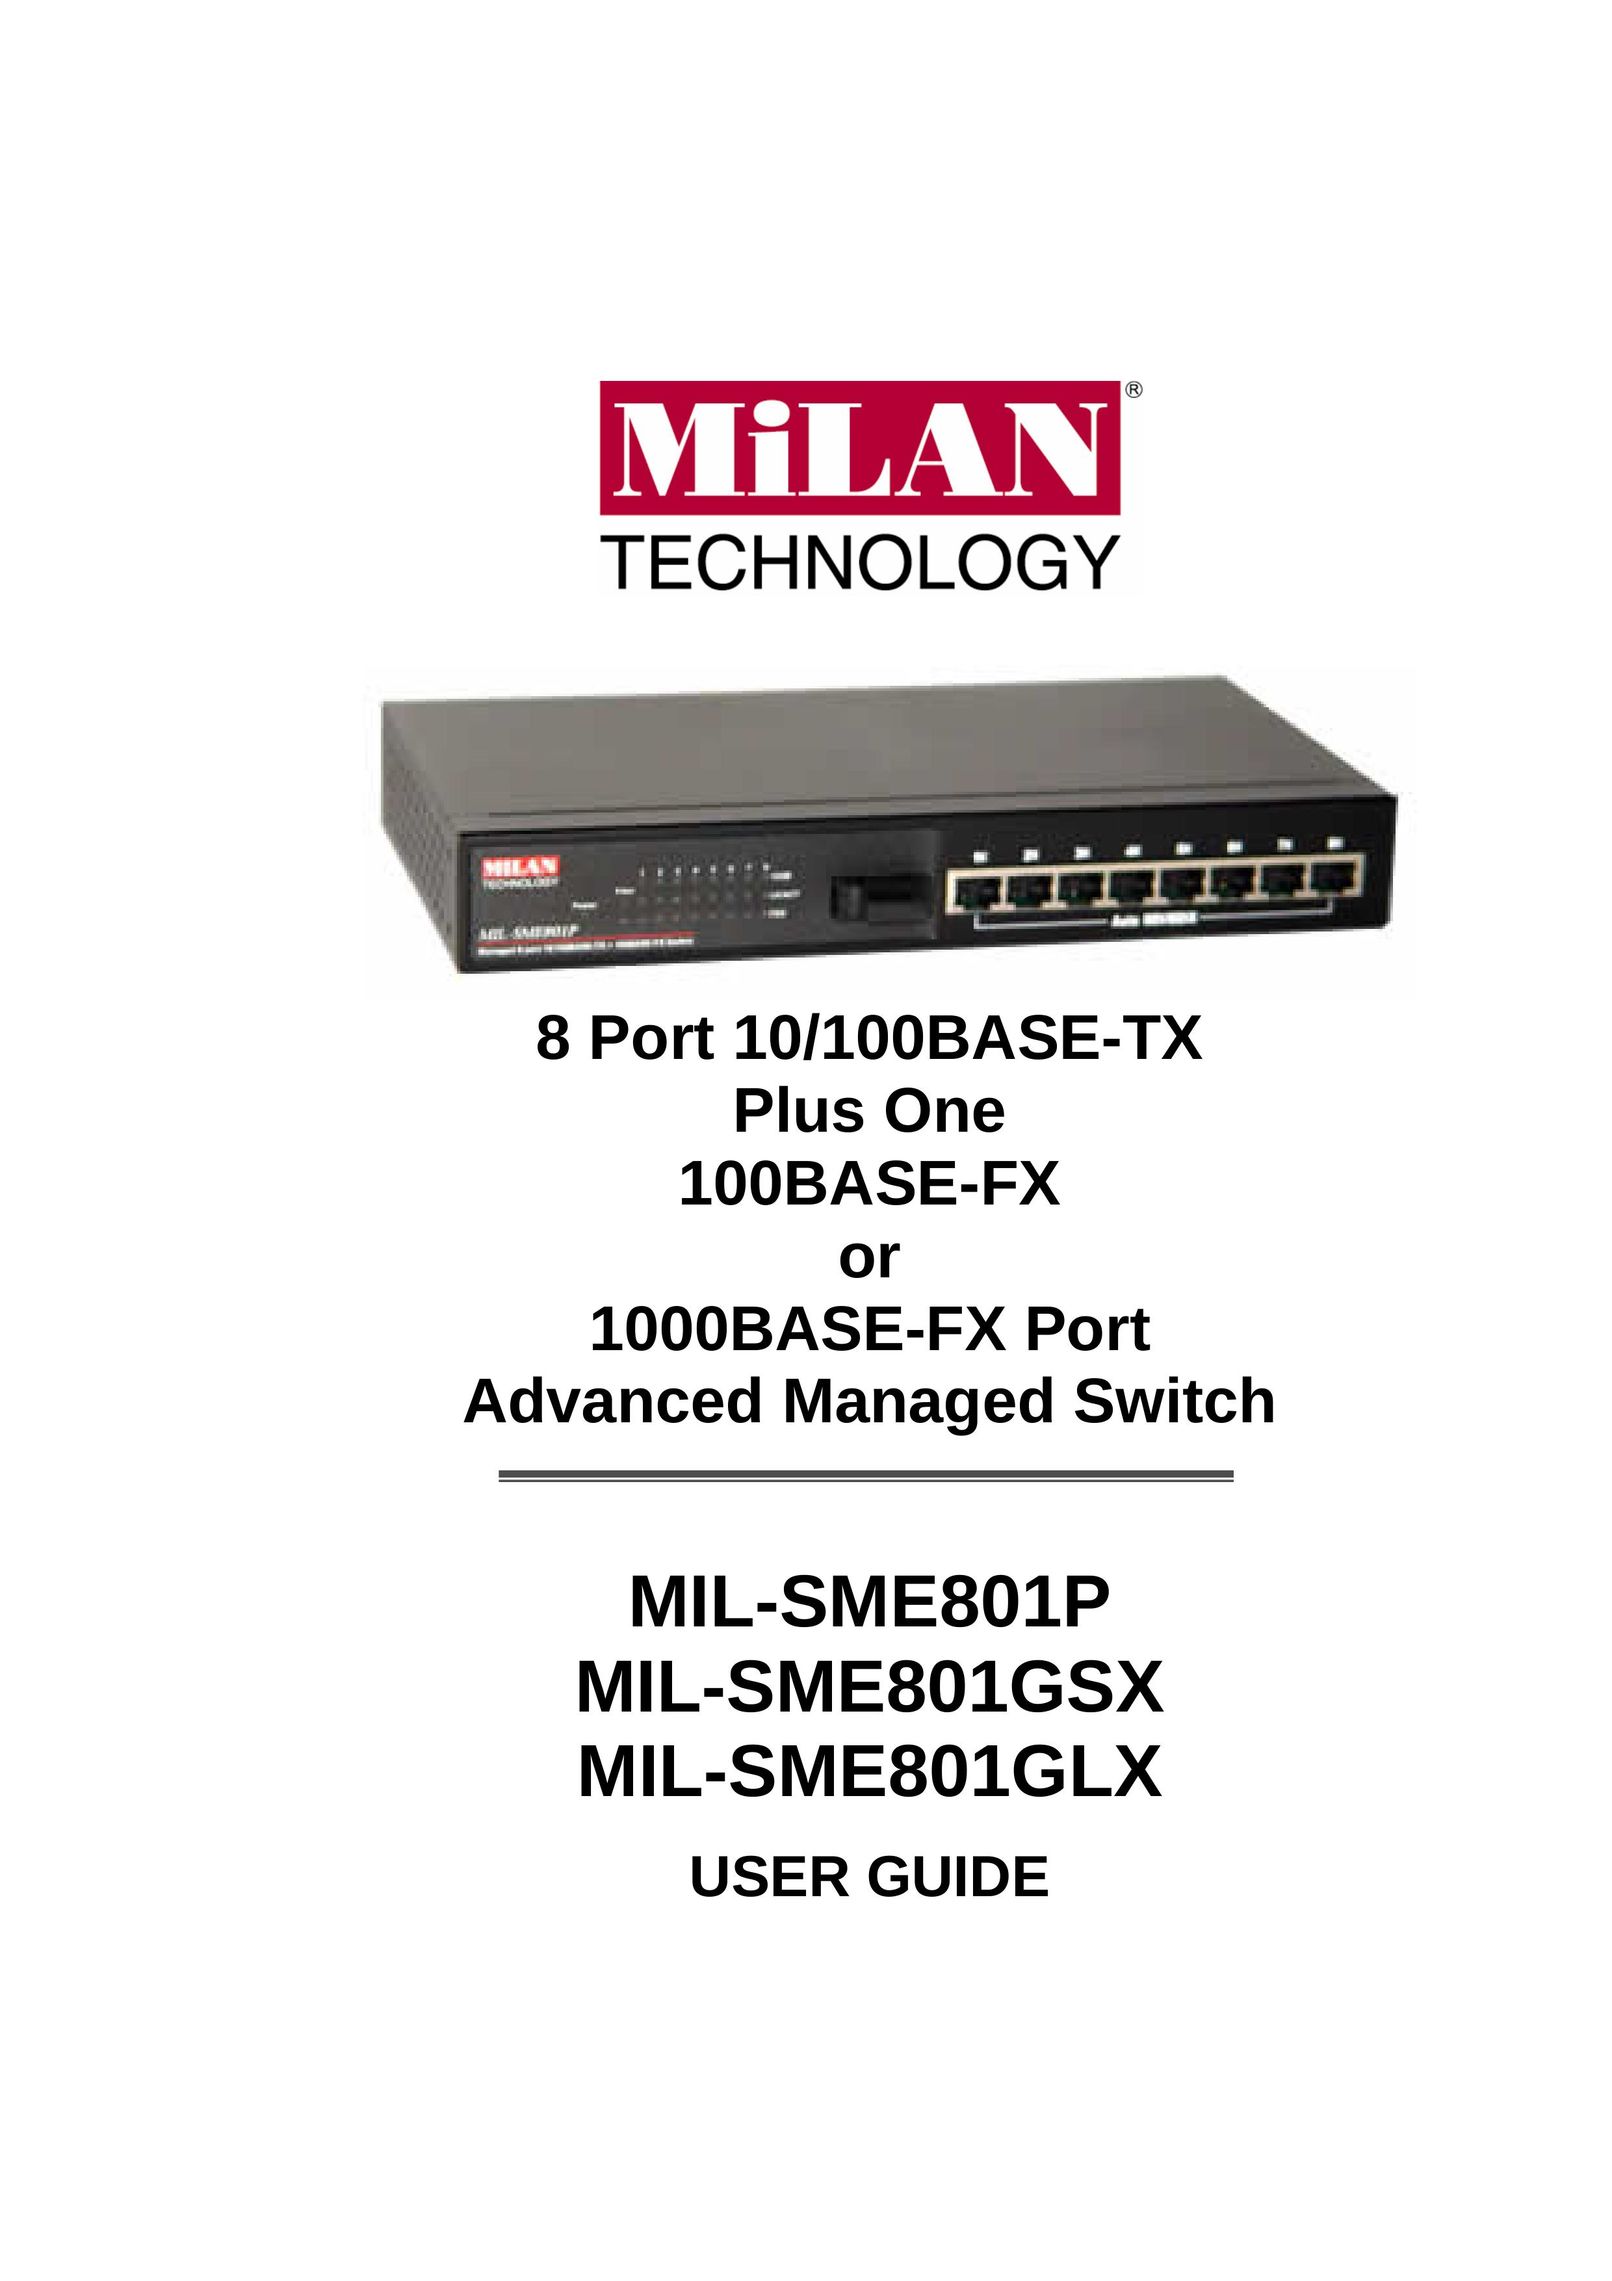 Milan Technology MIL-SME801GLX Switch User Manual